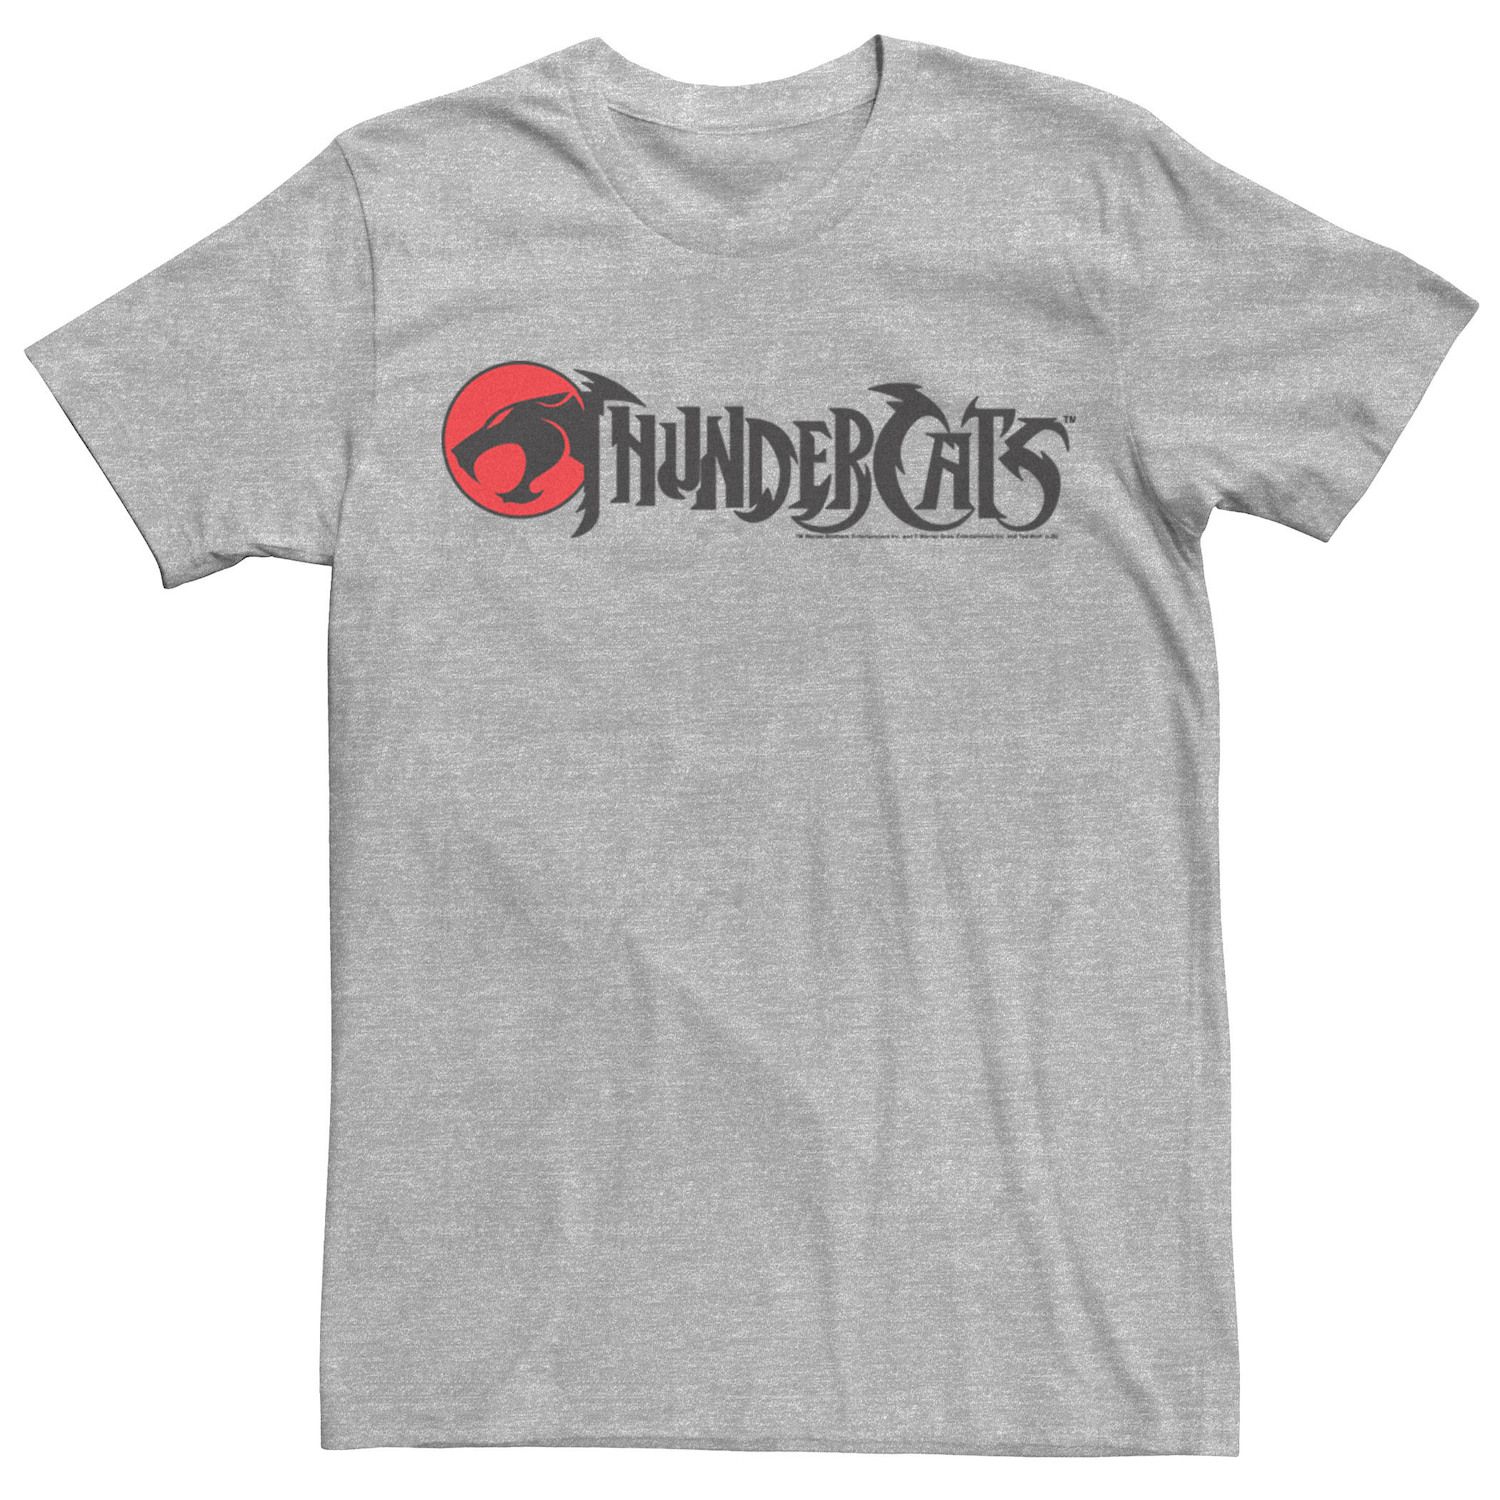 thundercats t shirt amazon